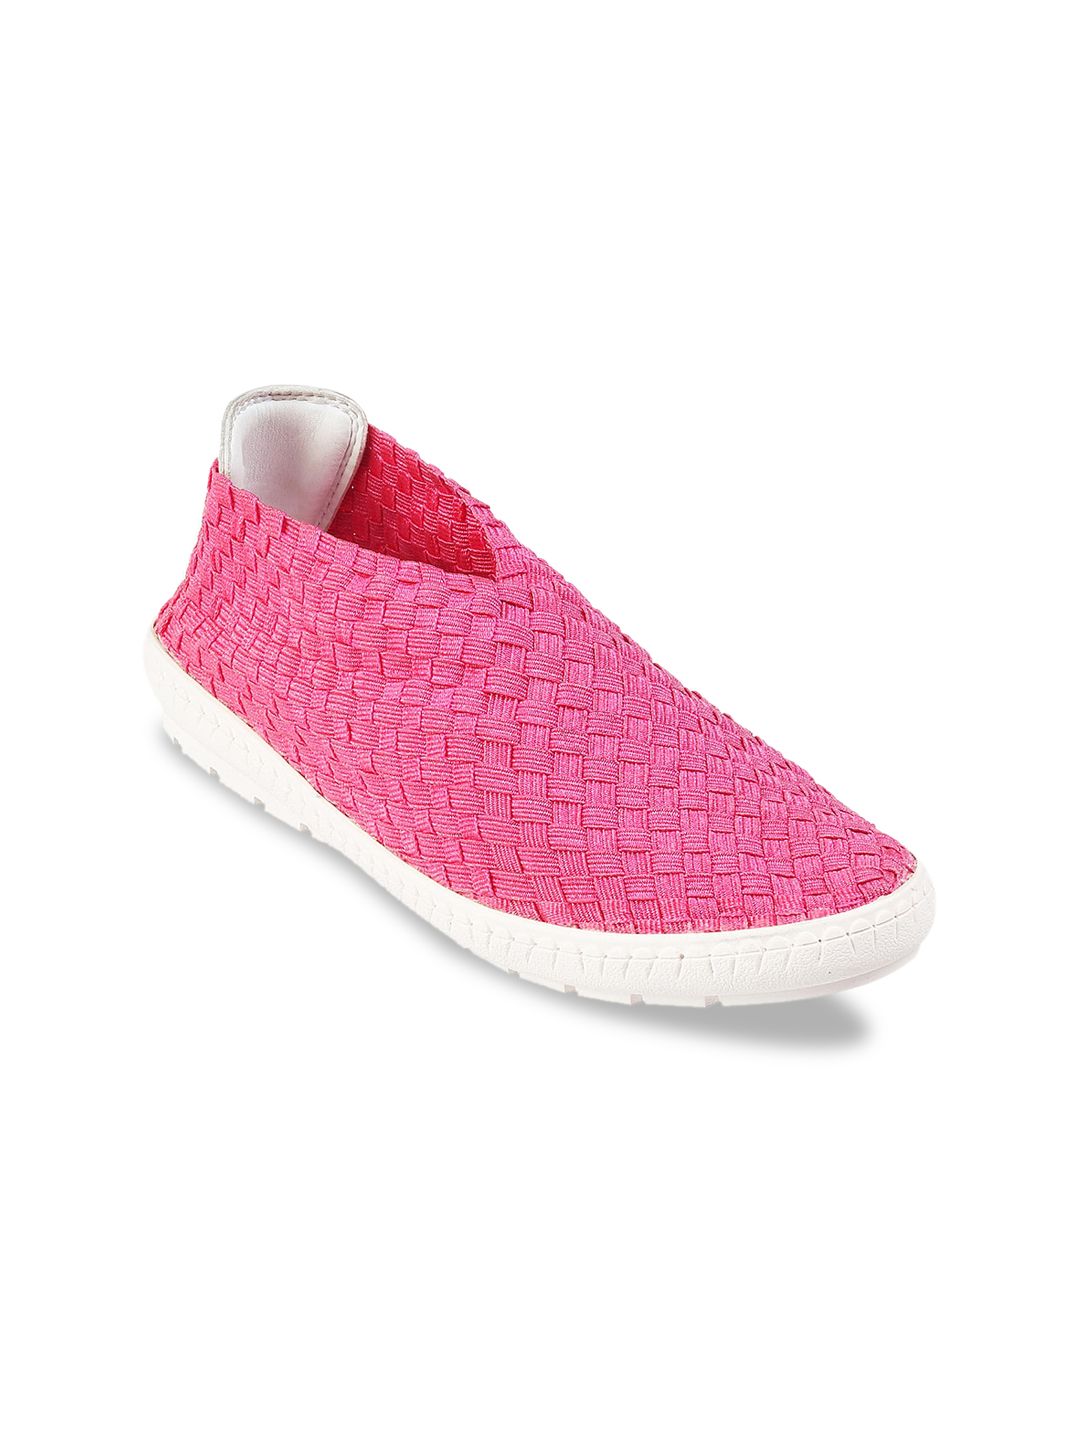 Catwalk Women Pink Woven Design Slip-On Sneakers Price in India